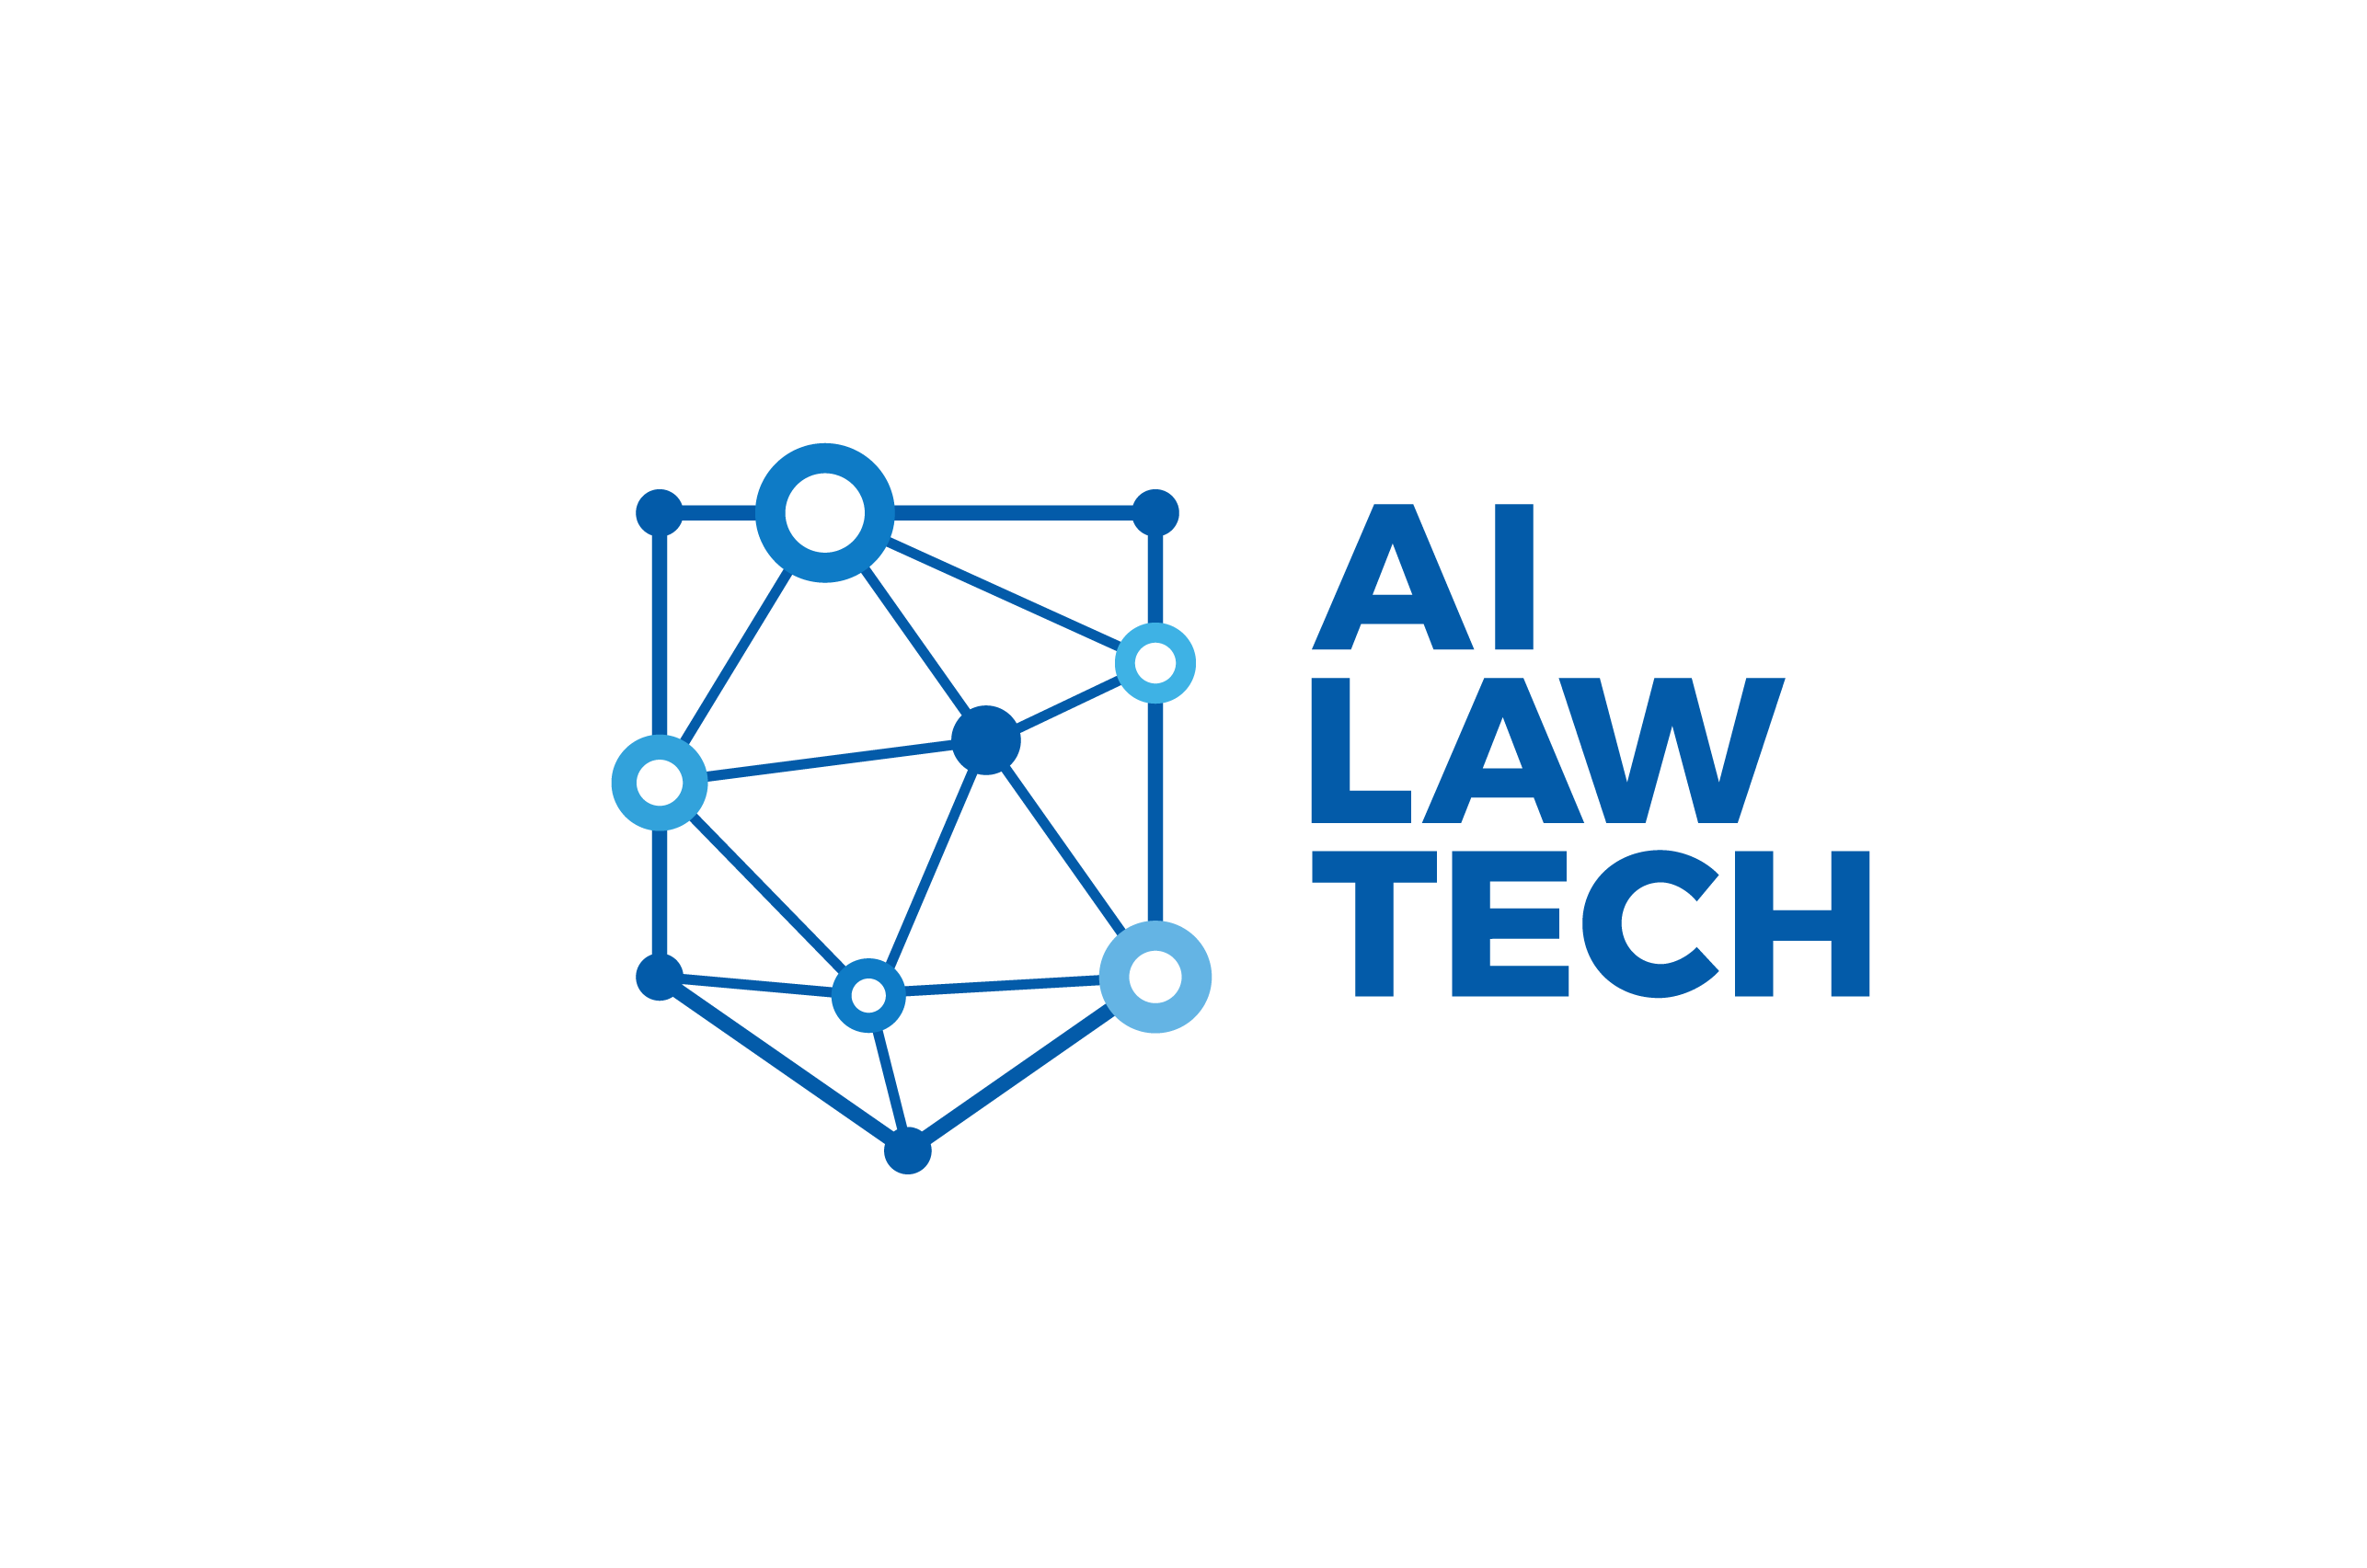 AI Law Tech